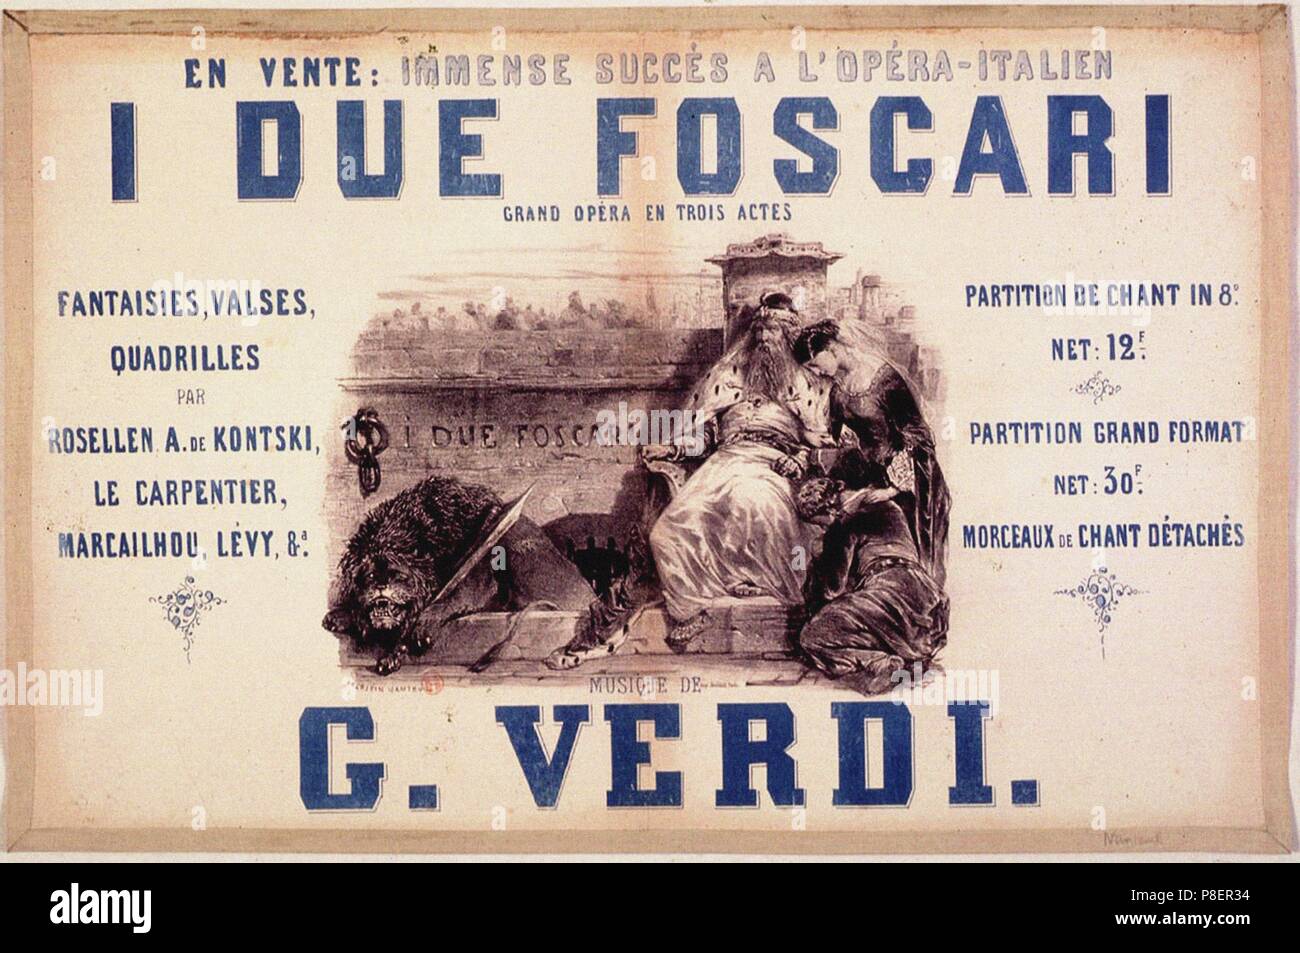 I due Foscari (The Two Foscari). Opera in three acts by Giuseppe Verdi, Paris. Museum: PRIVATE COLLECTION. Stock Photo